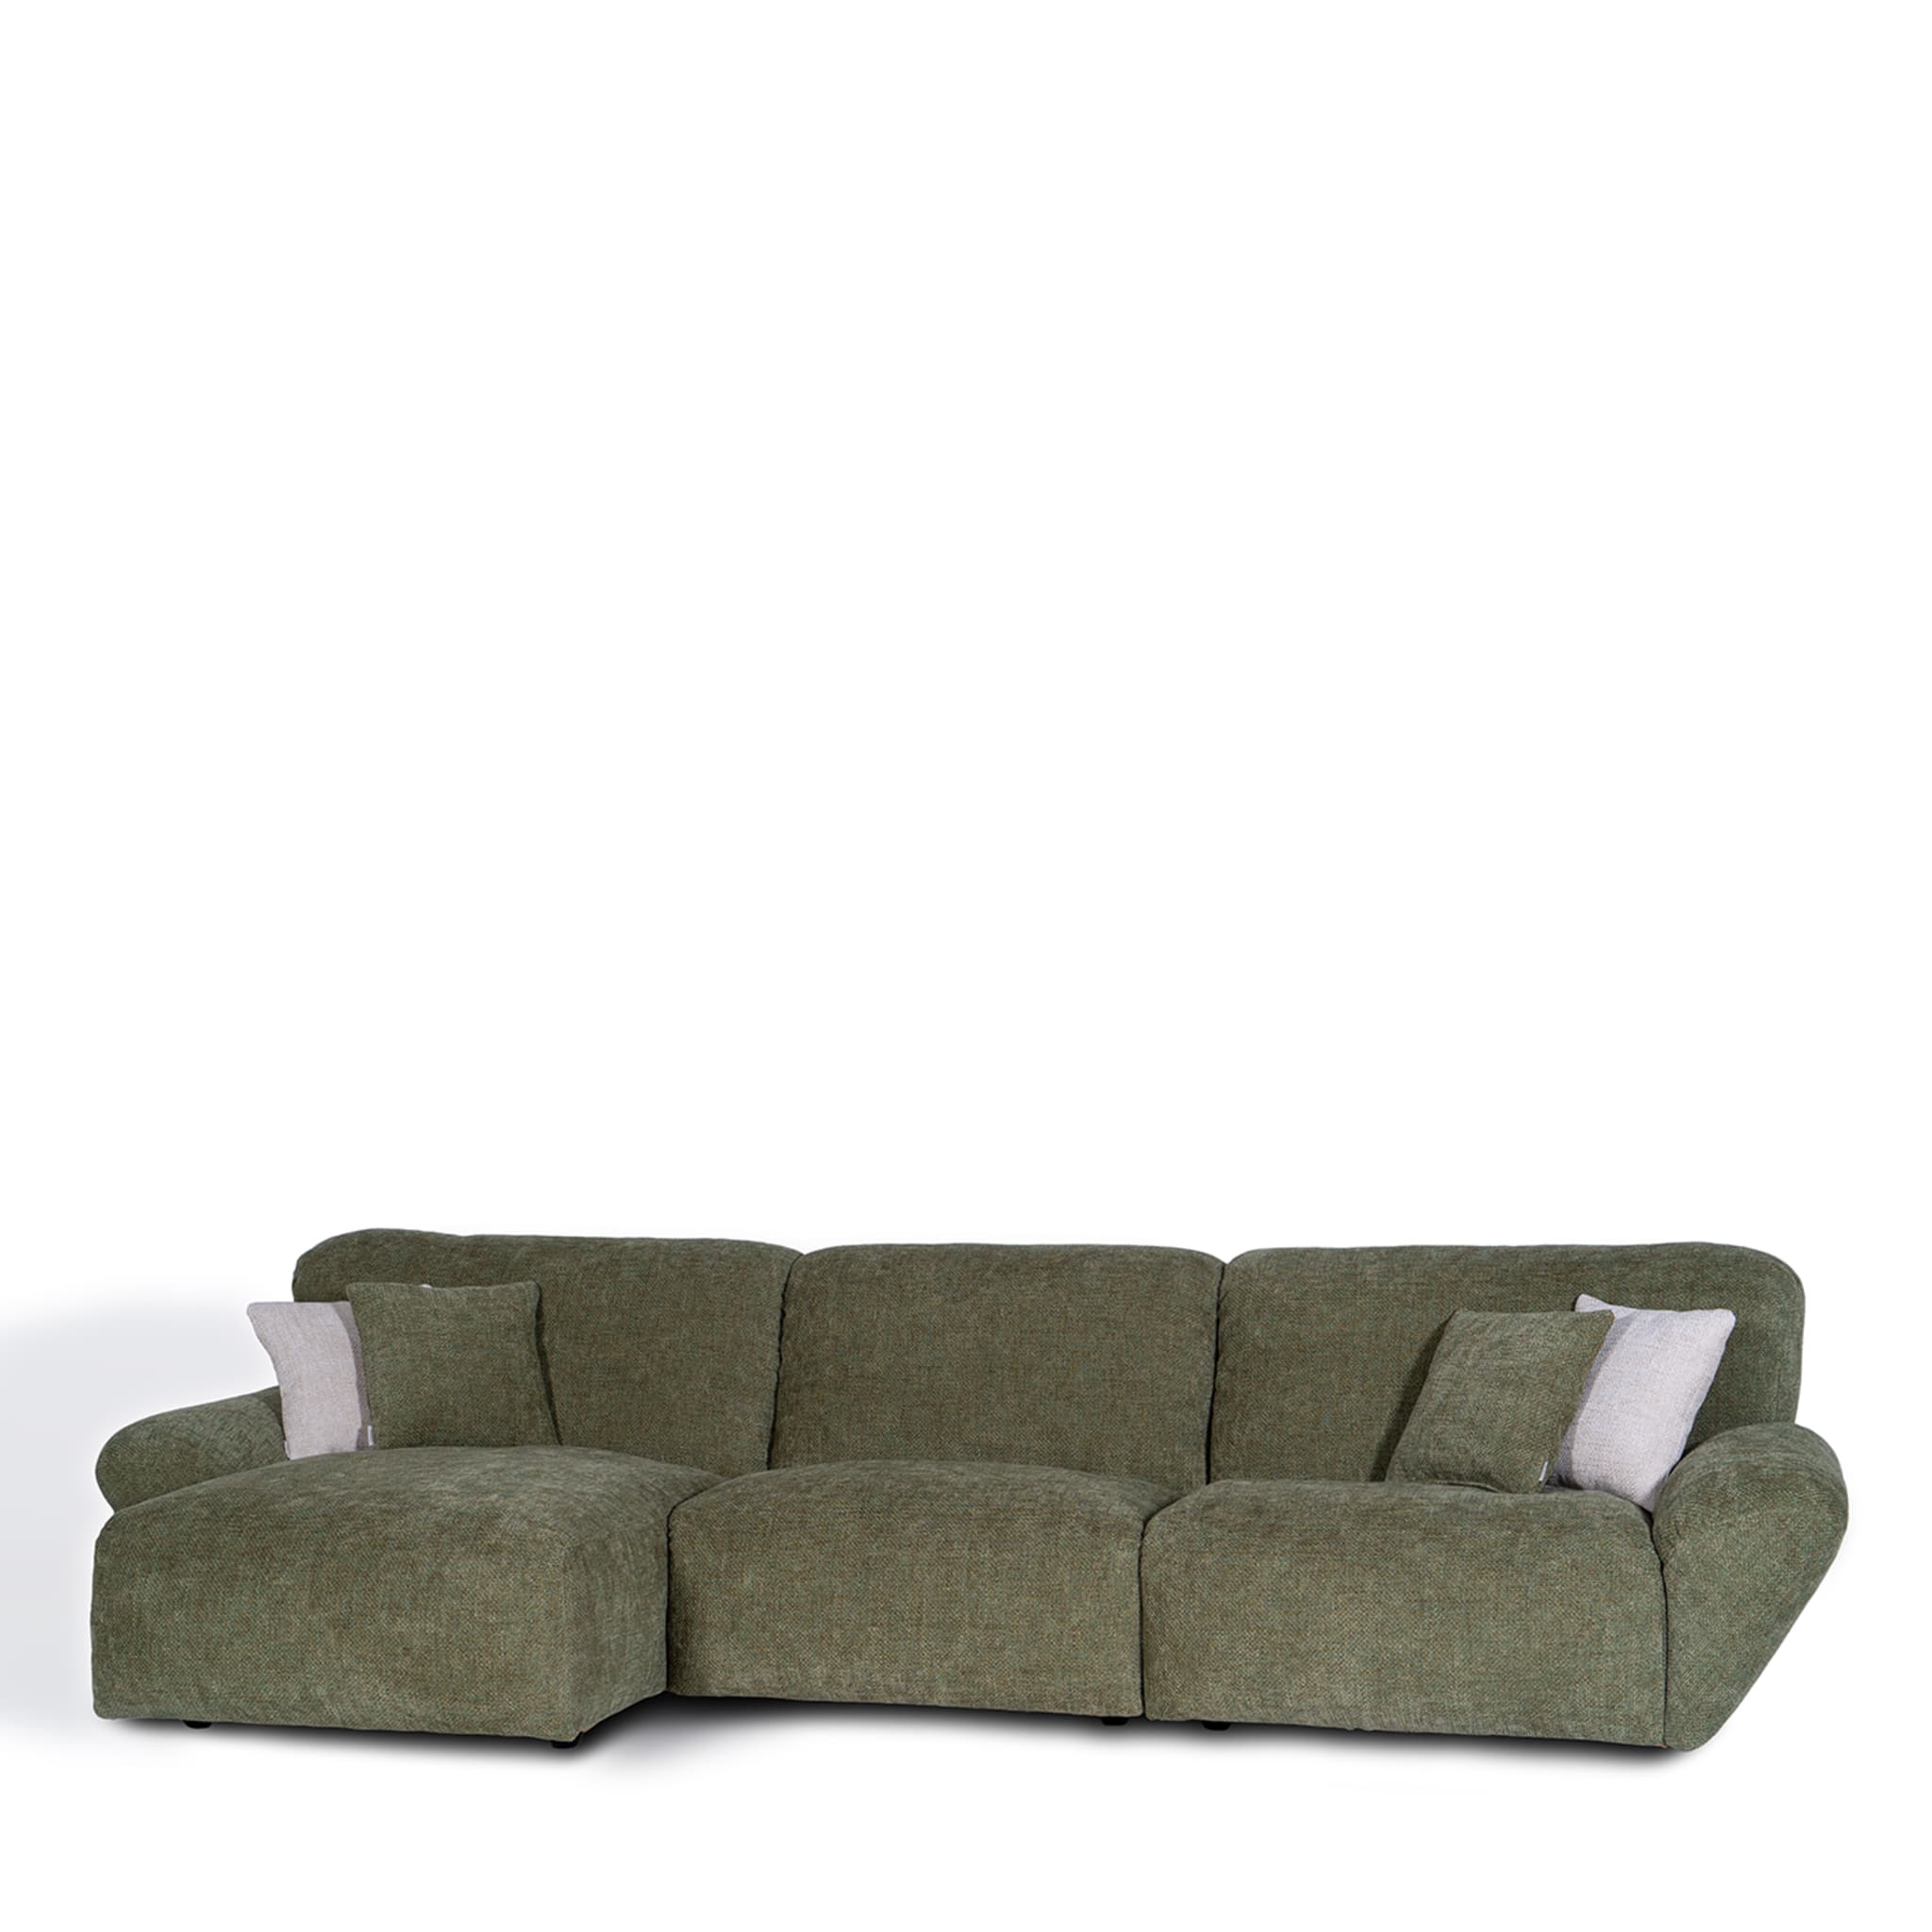 Beluga Green 3-Seater Sofa by Marco & Giulio Mantellassi - Alternative view 5